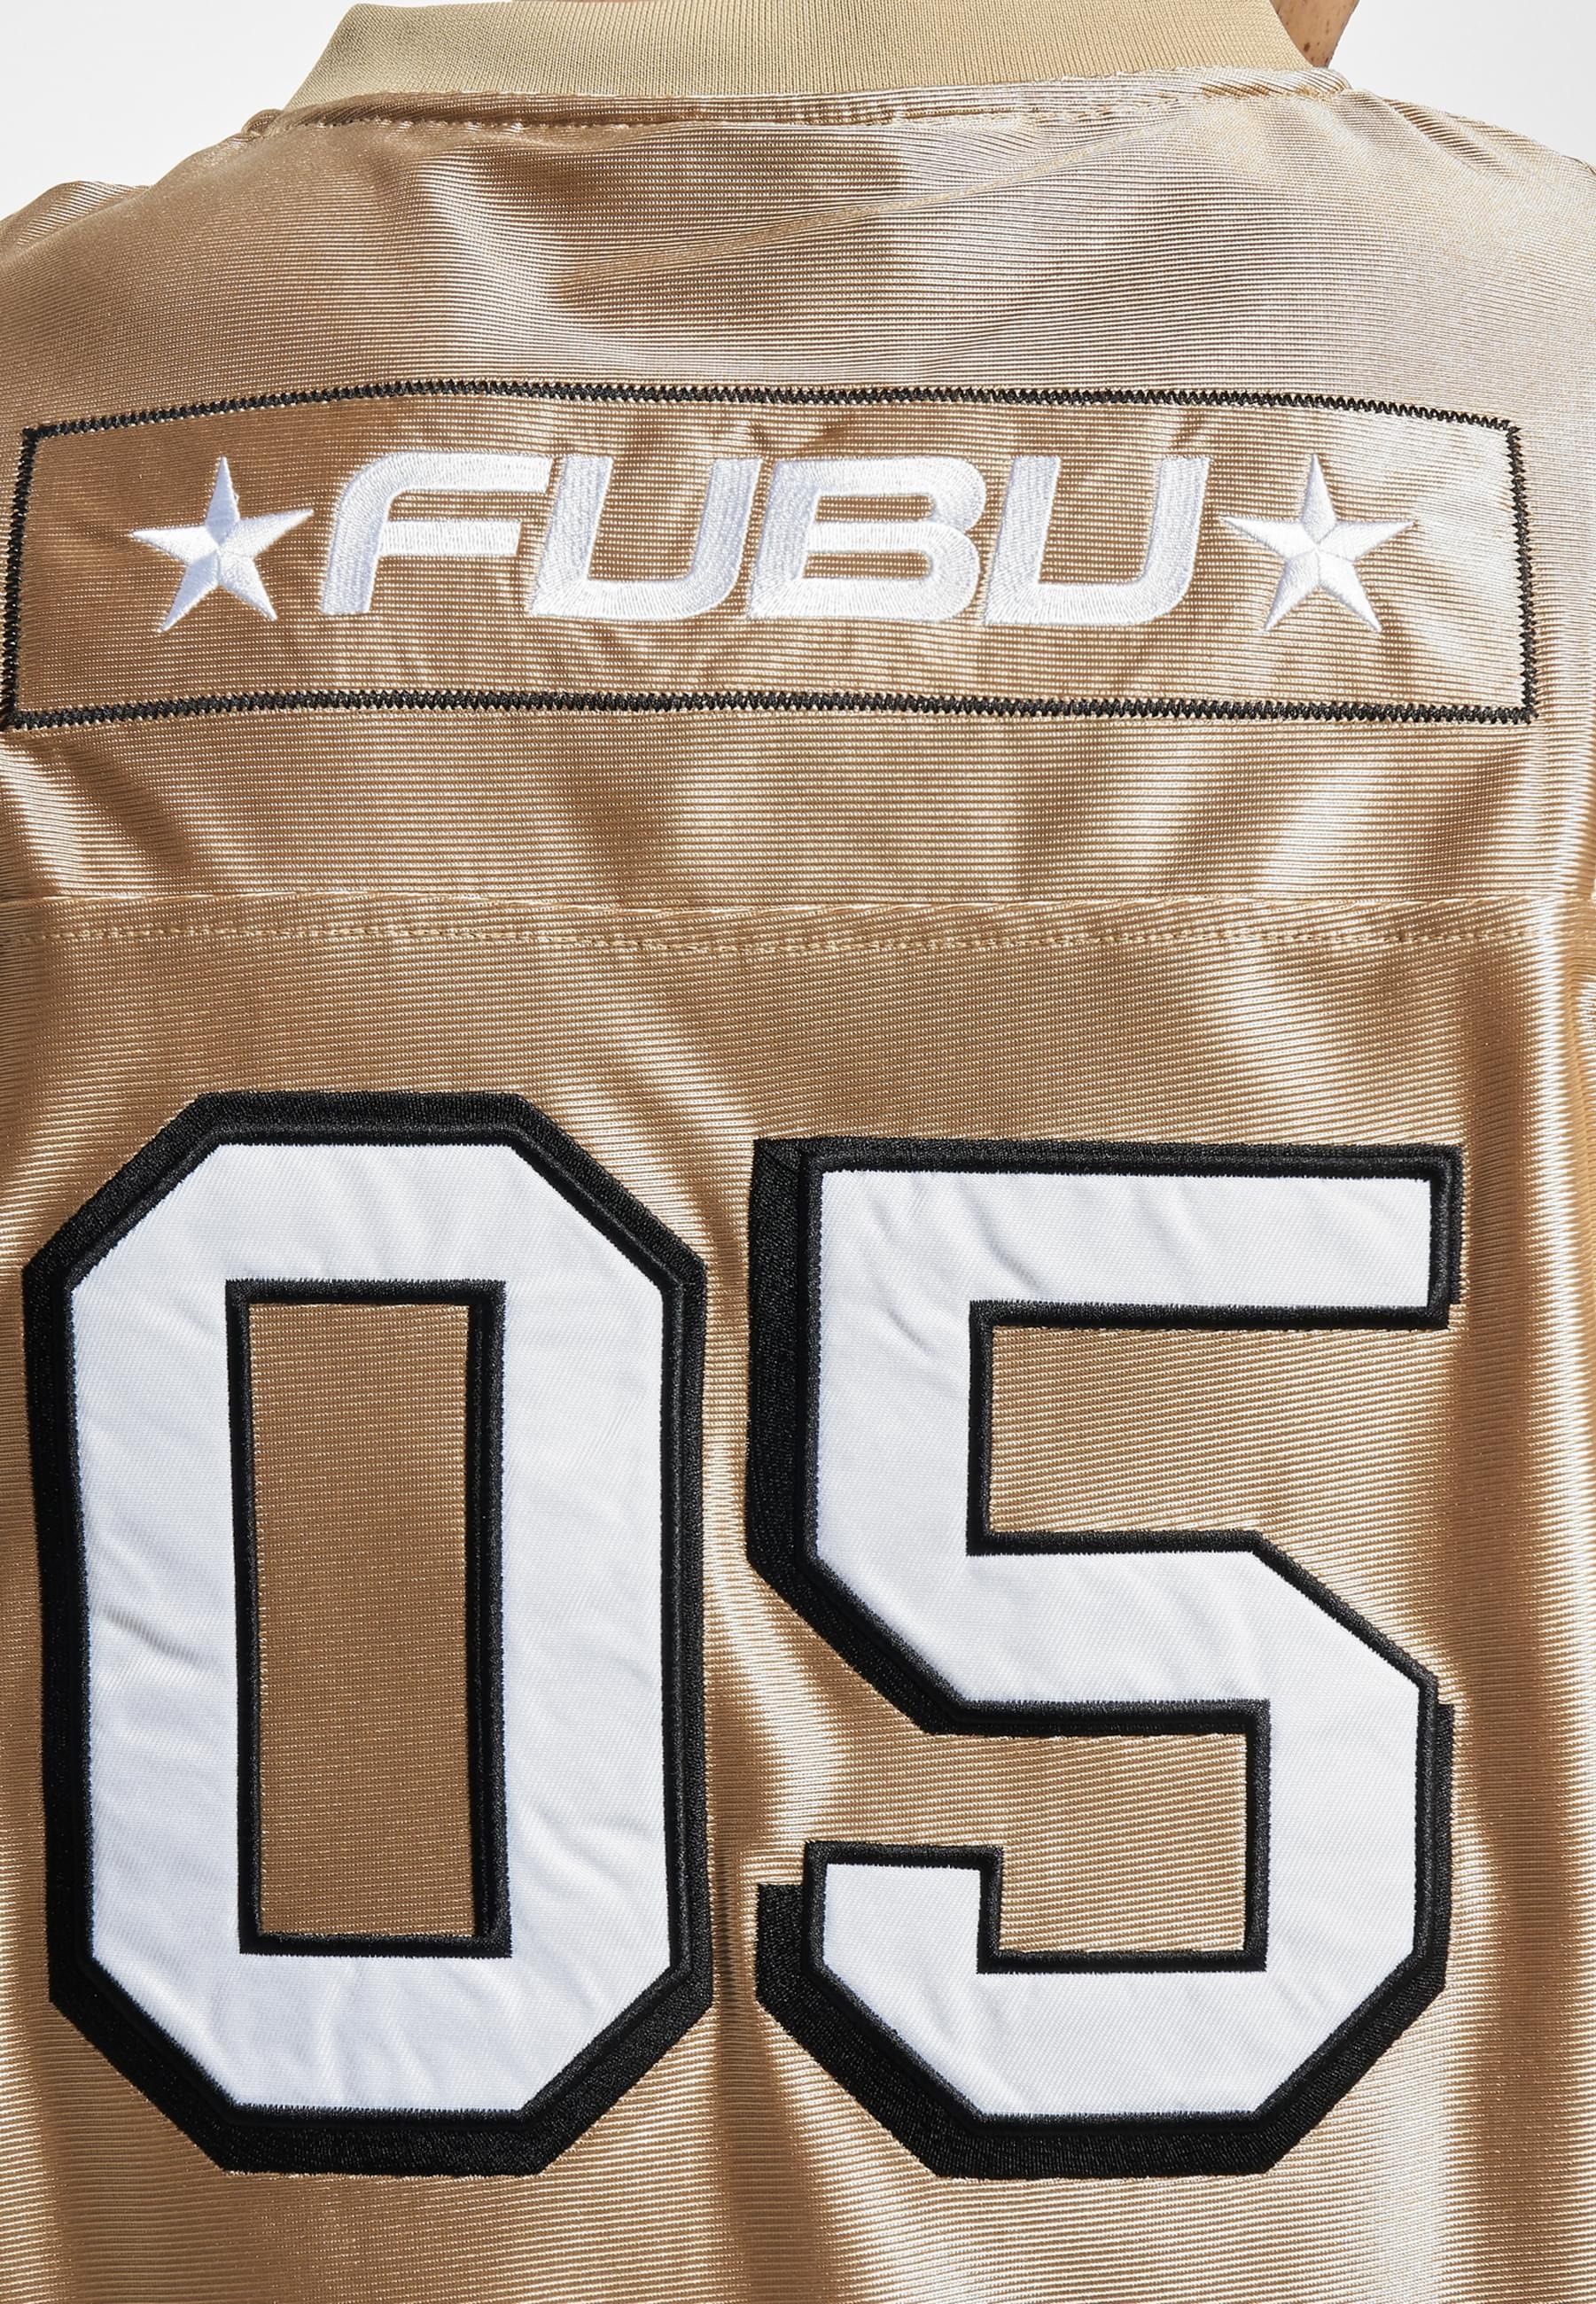 Fubu T-Shirt »Fubu Herren FM232-007-2 FUBU Corporate Football Jersey«, (1 tlg.)